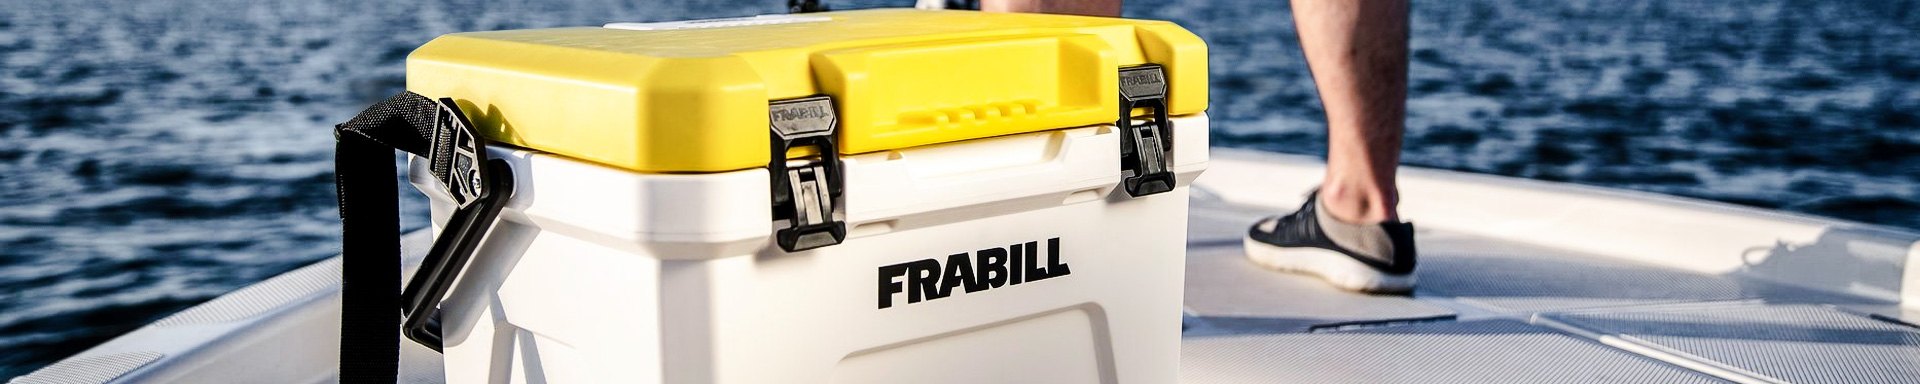 Frabill Fishing Tools & Equipment